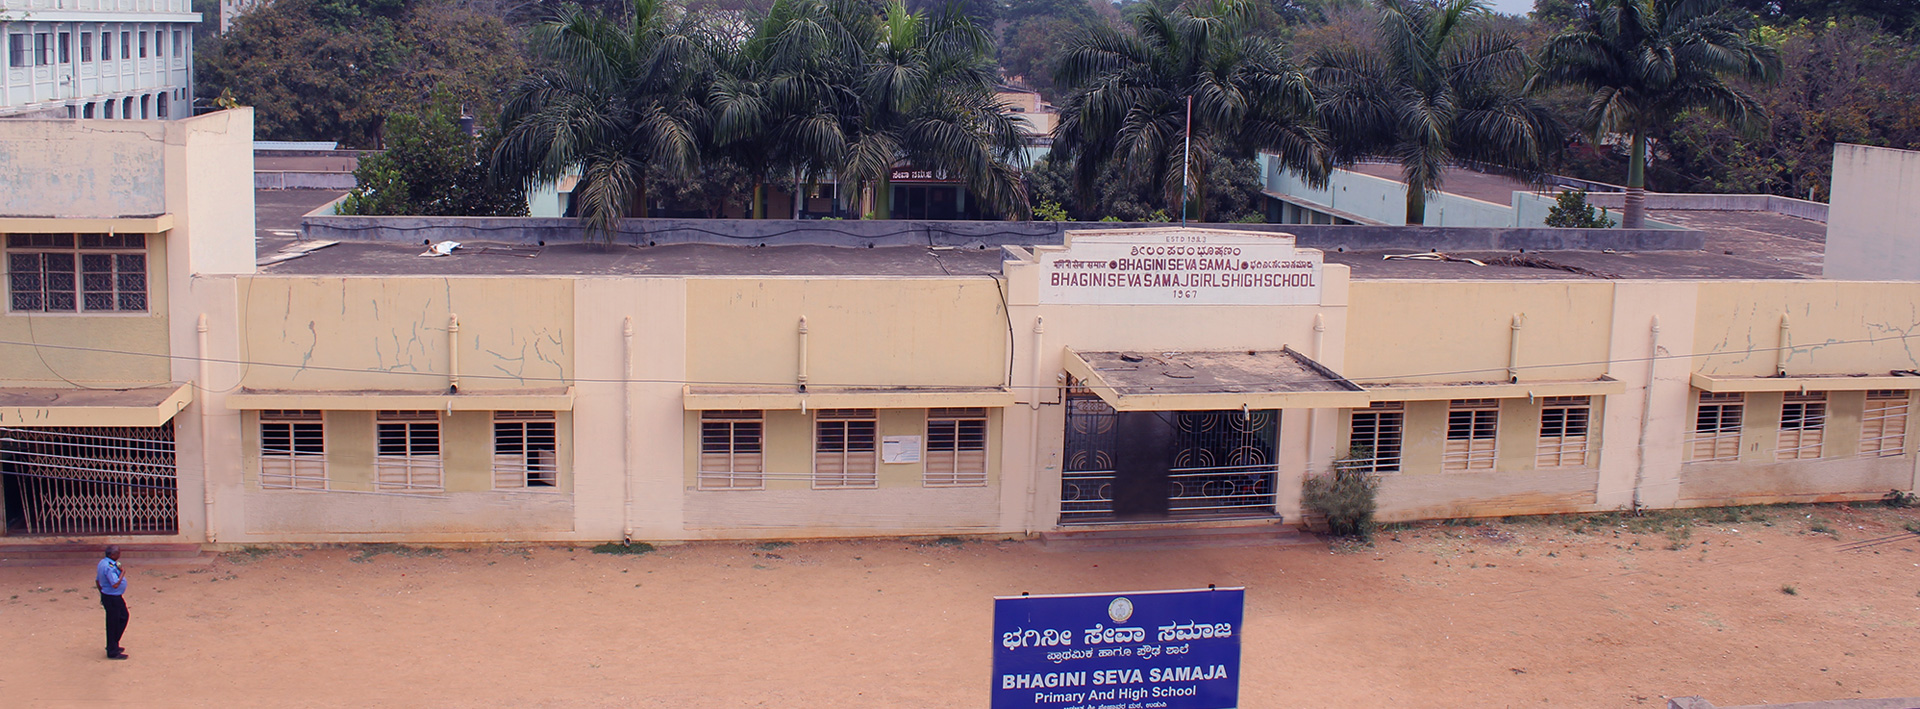 Bhagini Seva Samaja - Library Banner